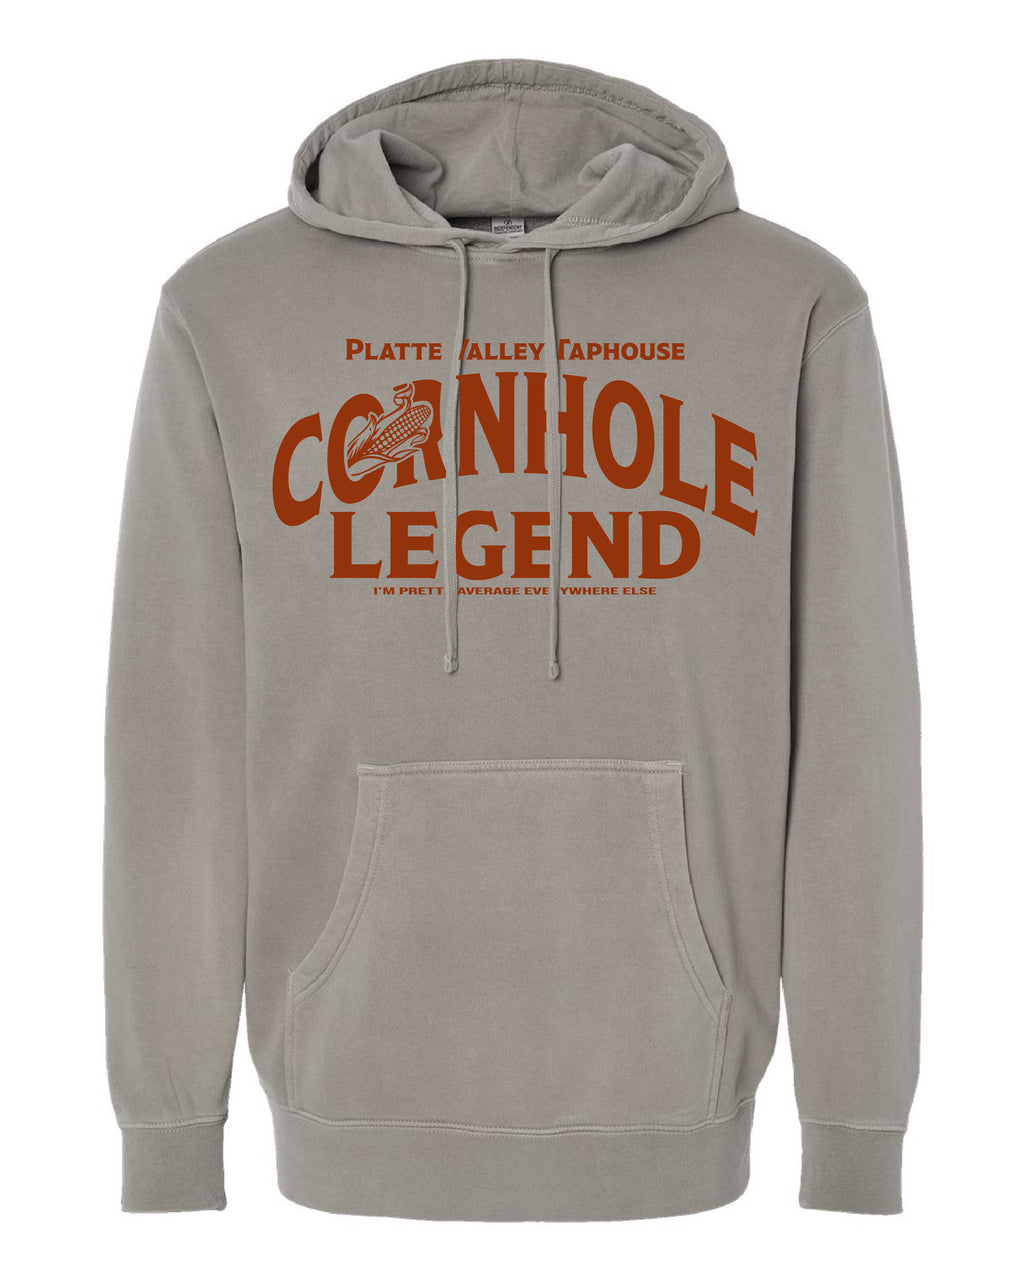 PVT Cornhole Legend Hooded Sweatshirt